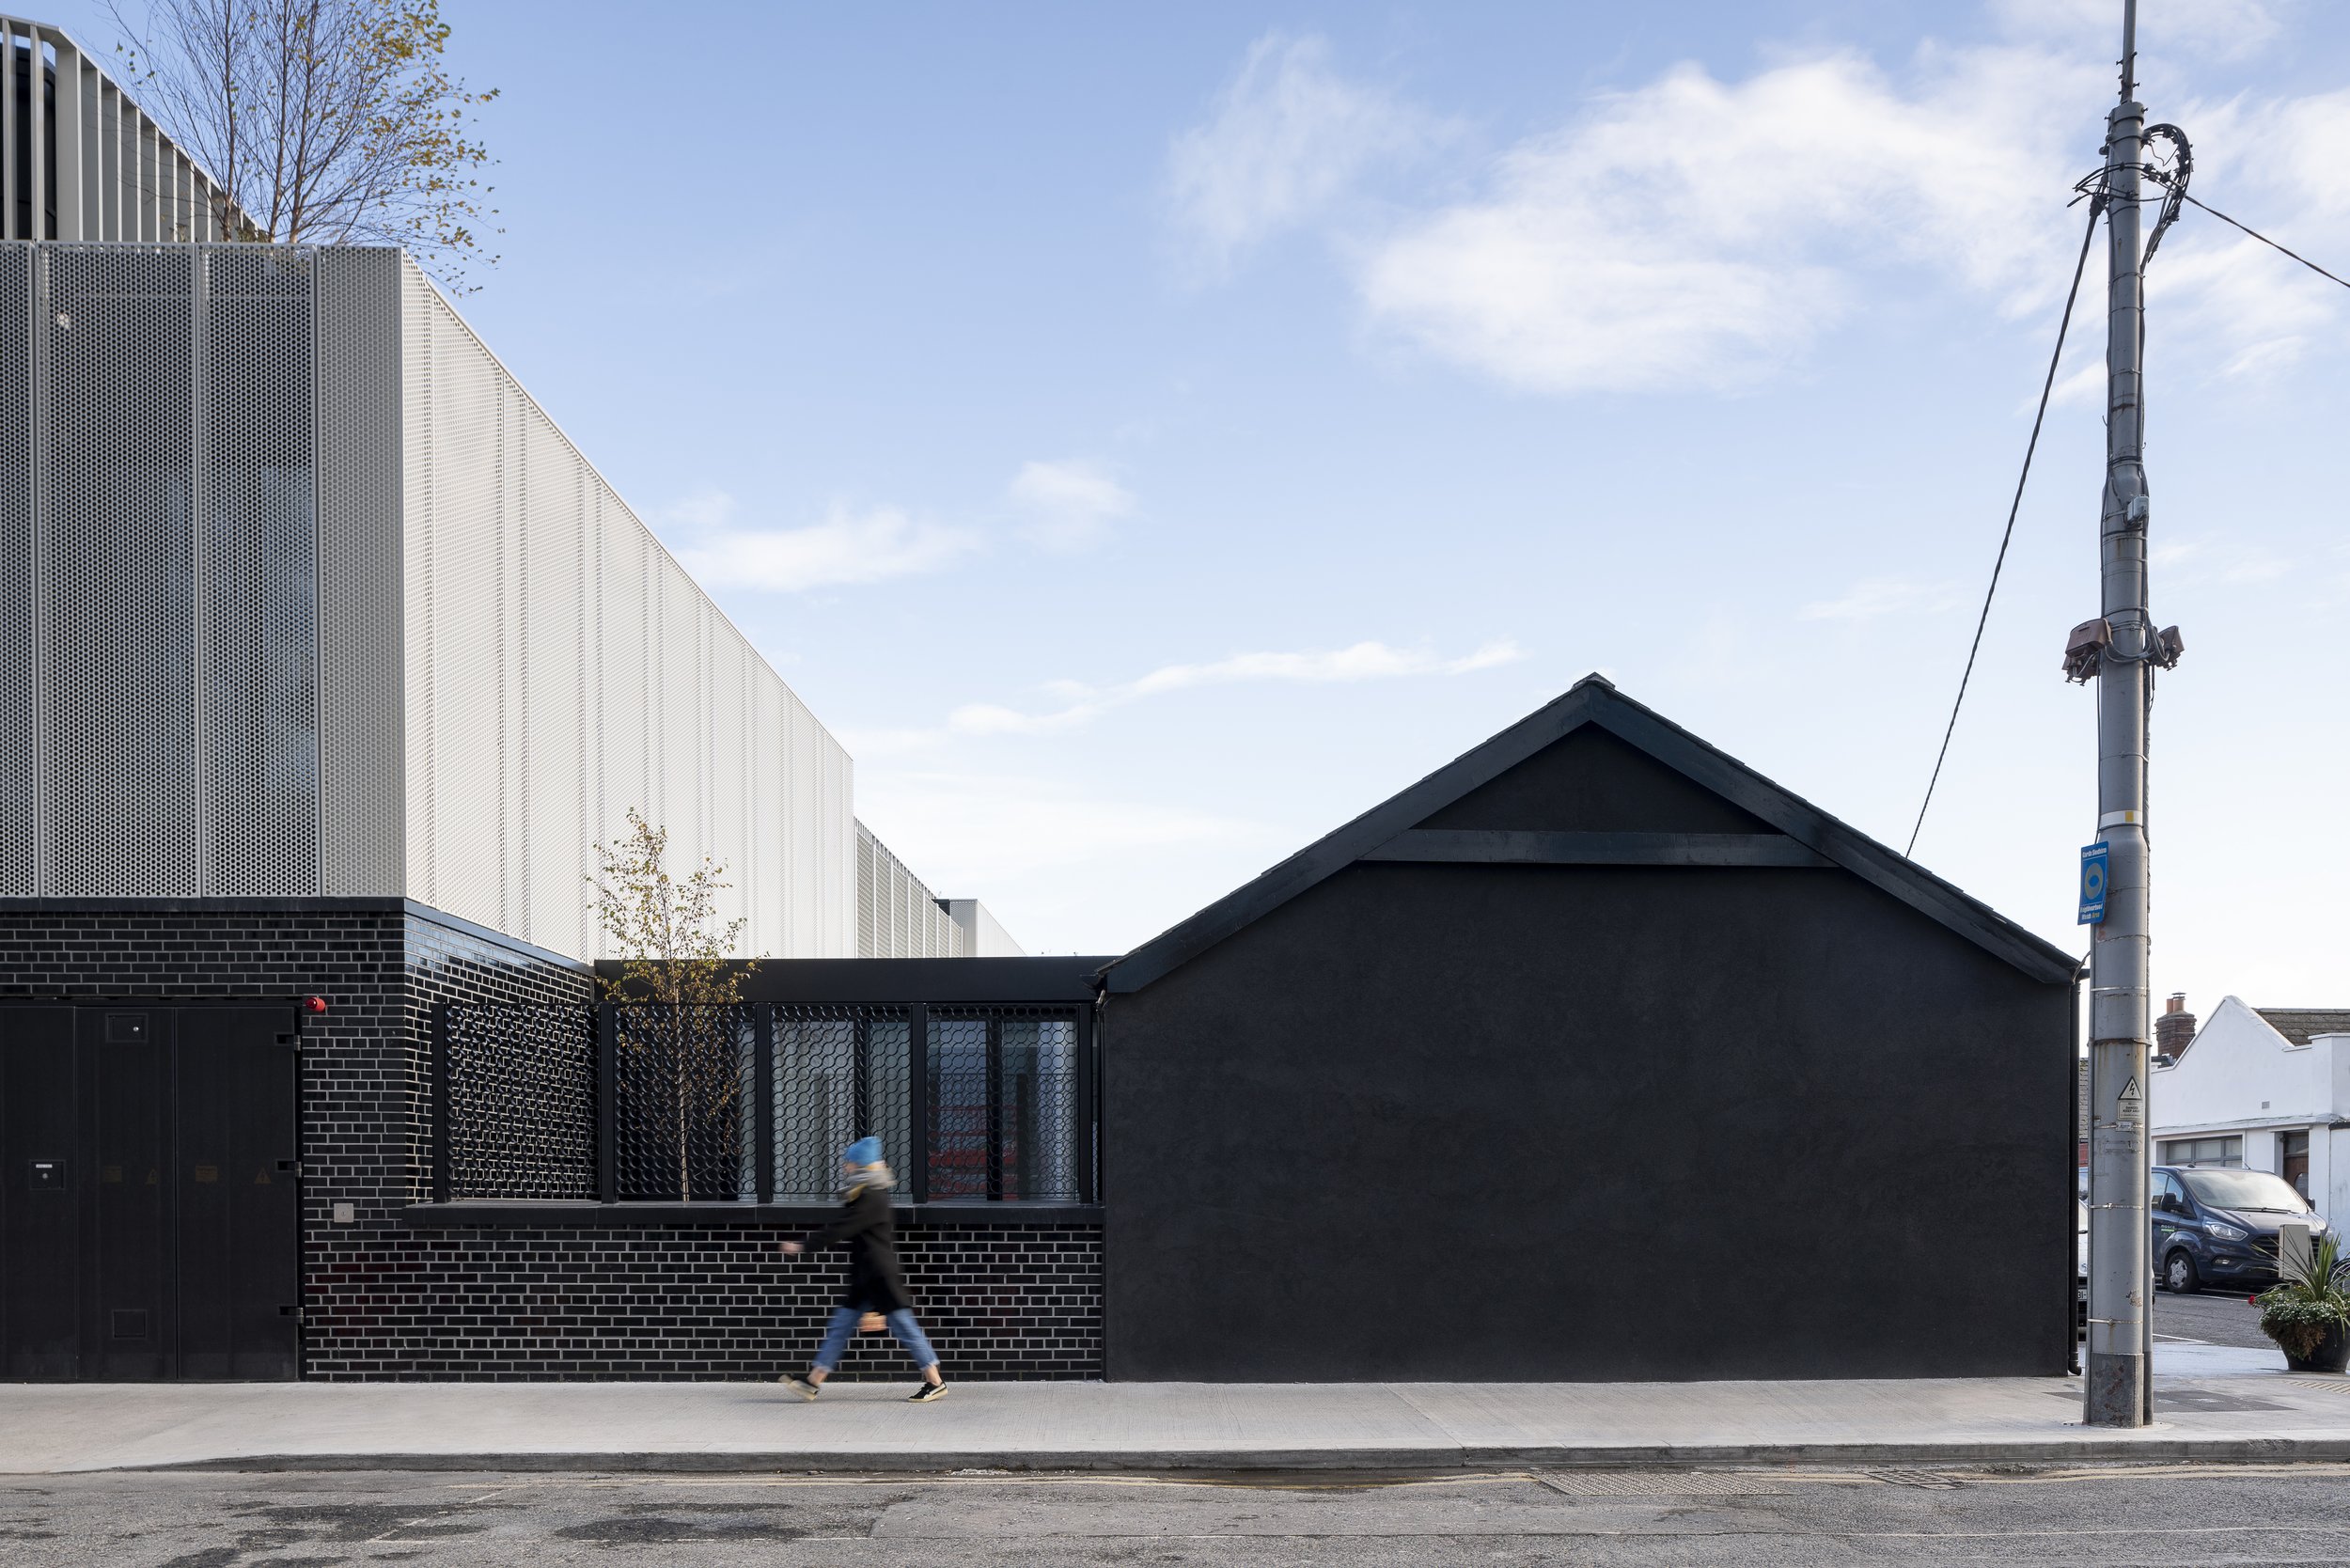 Award nominated House Refurbishment project in Dublin designed by Saul Design